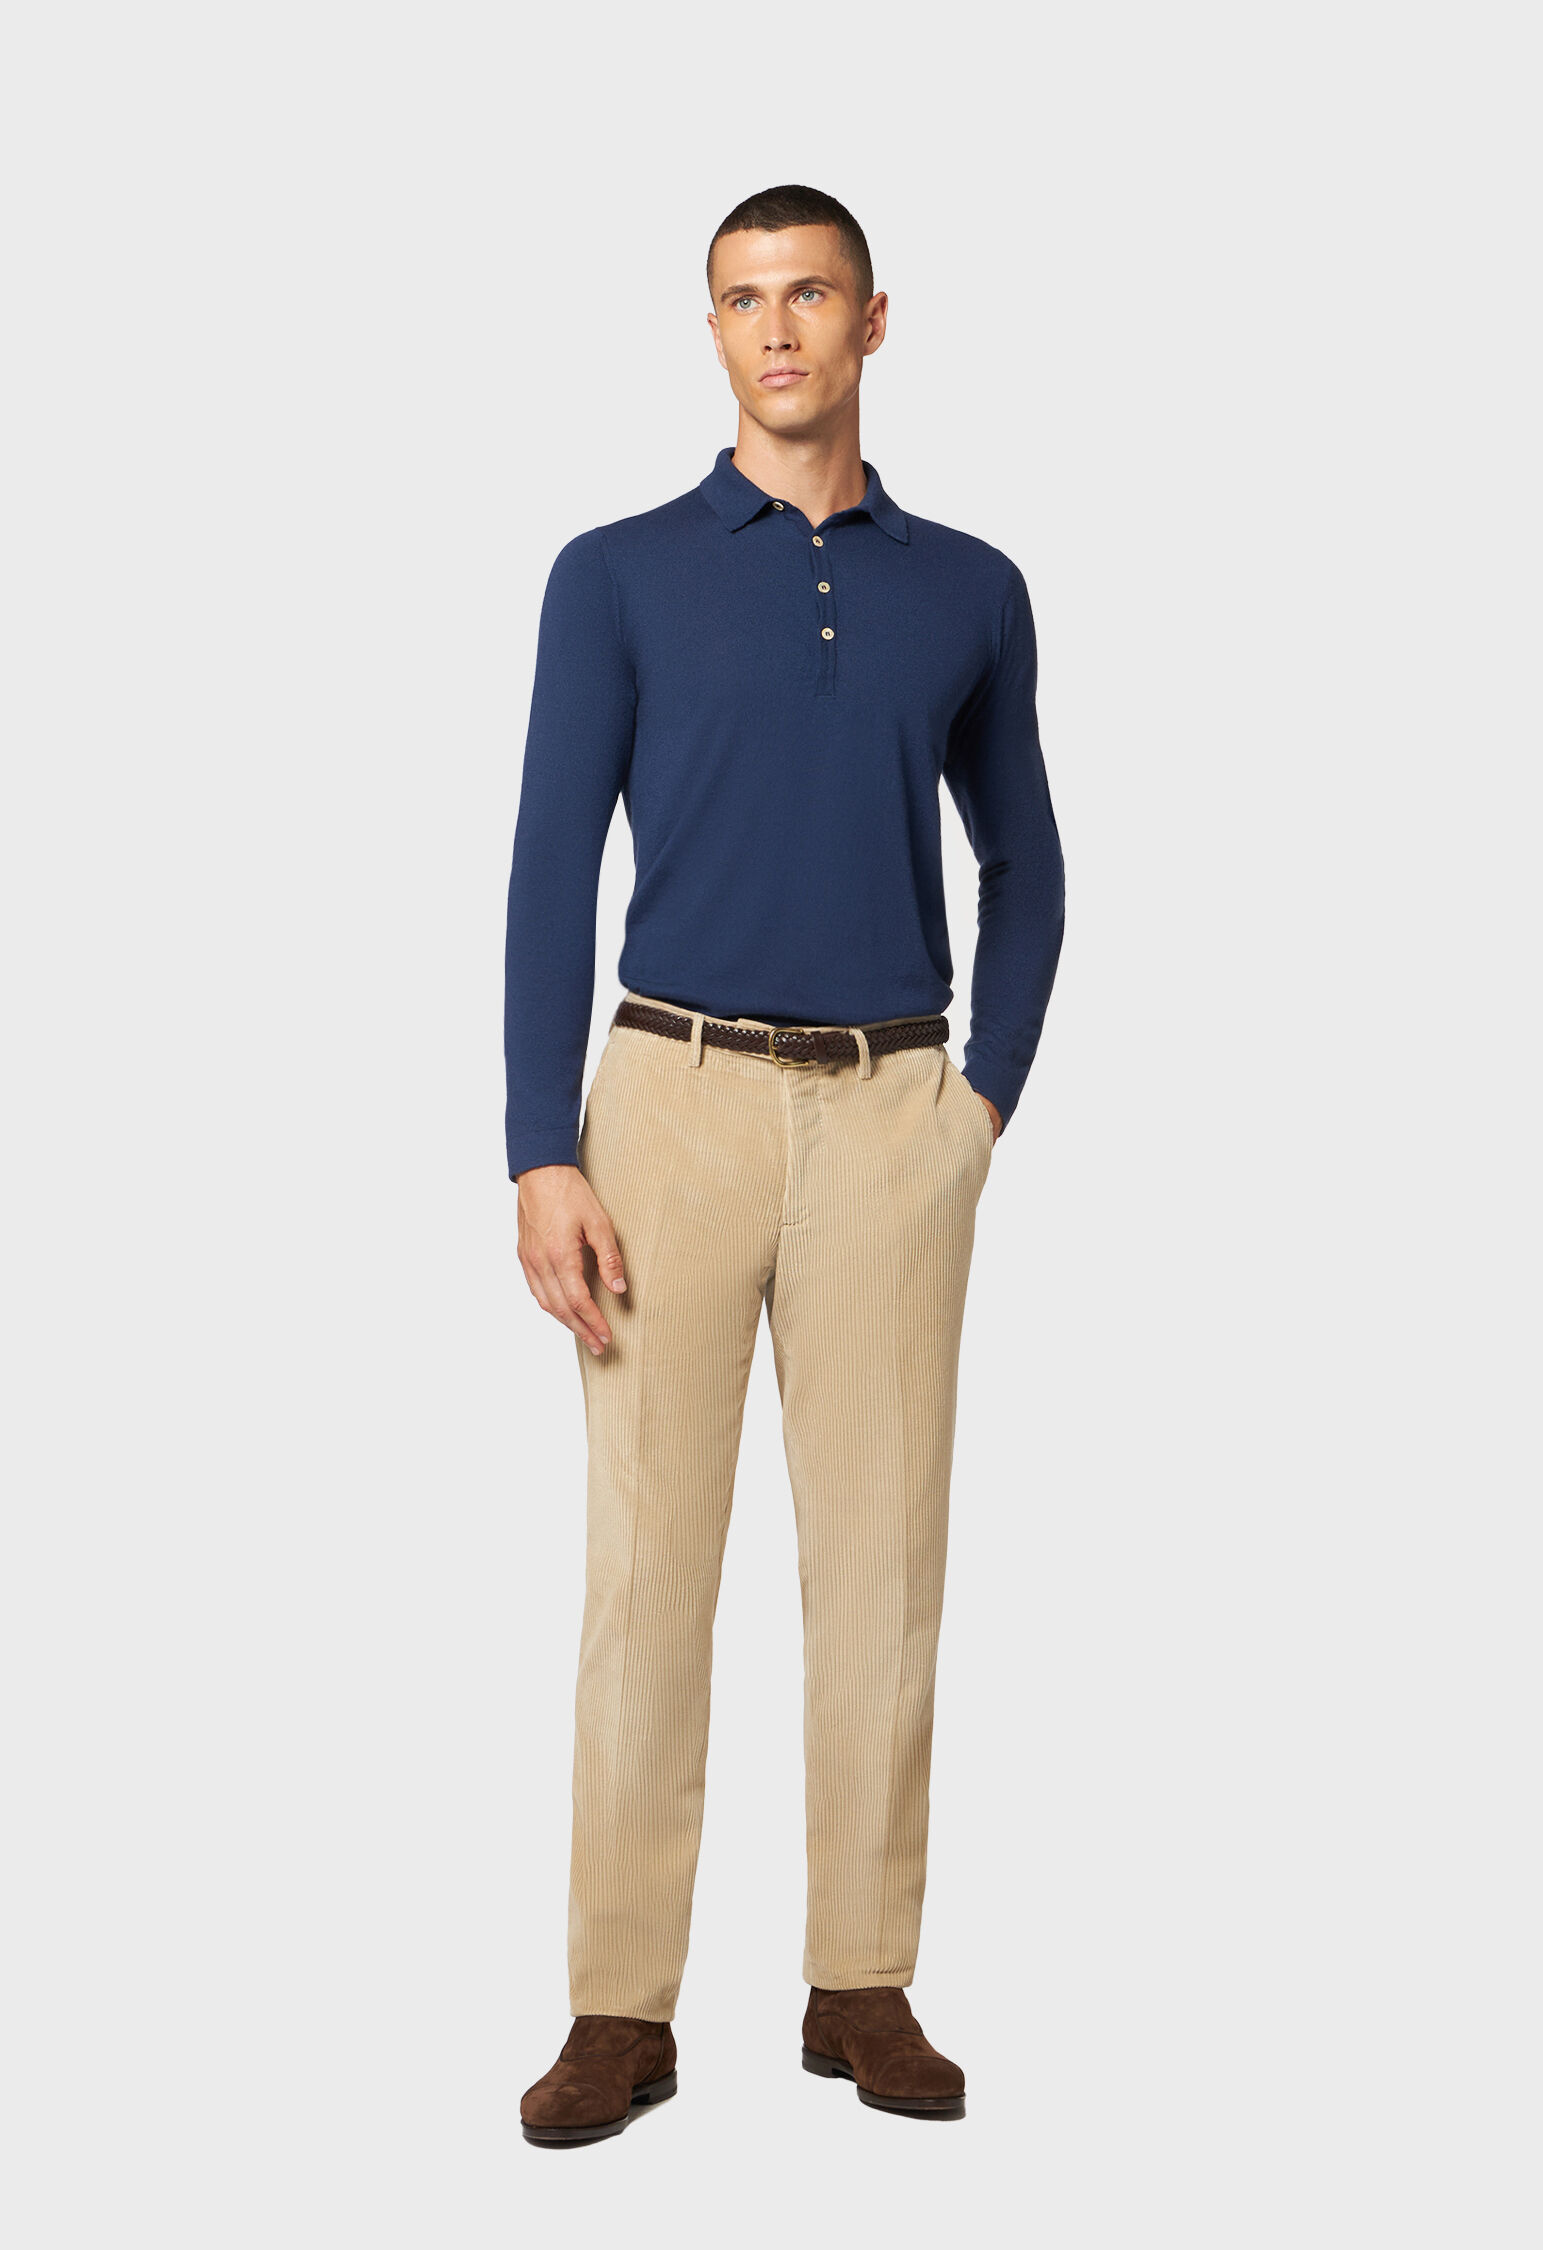 Plain Men Blue Corduroy Trouser, Formal Wear at Rs 1000/piece in New Delhi  | ID: 2851358231655